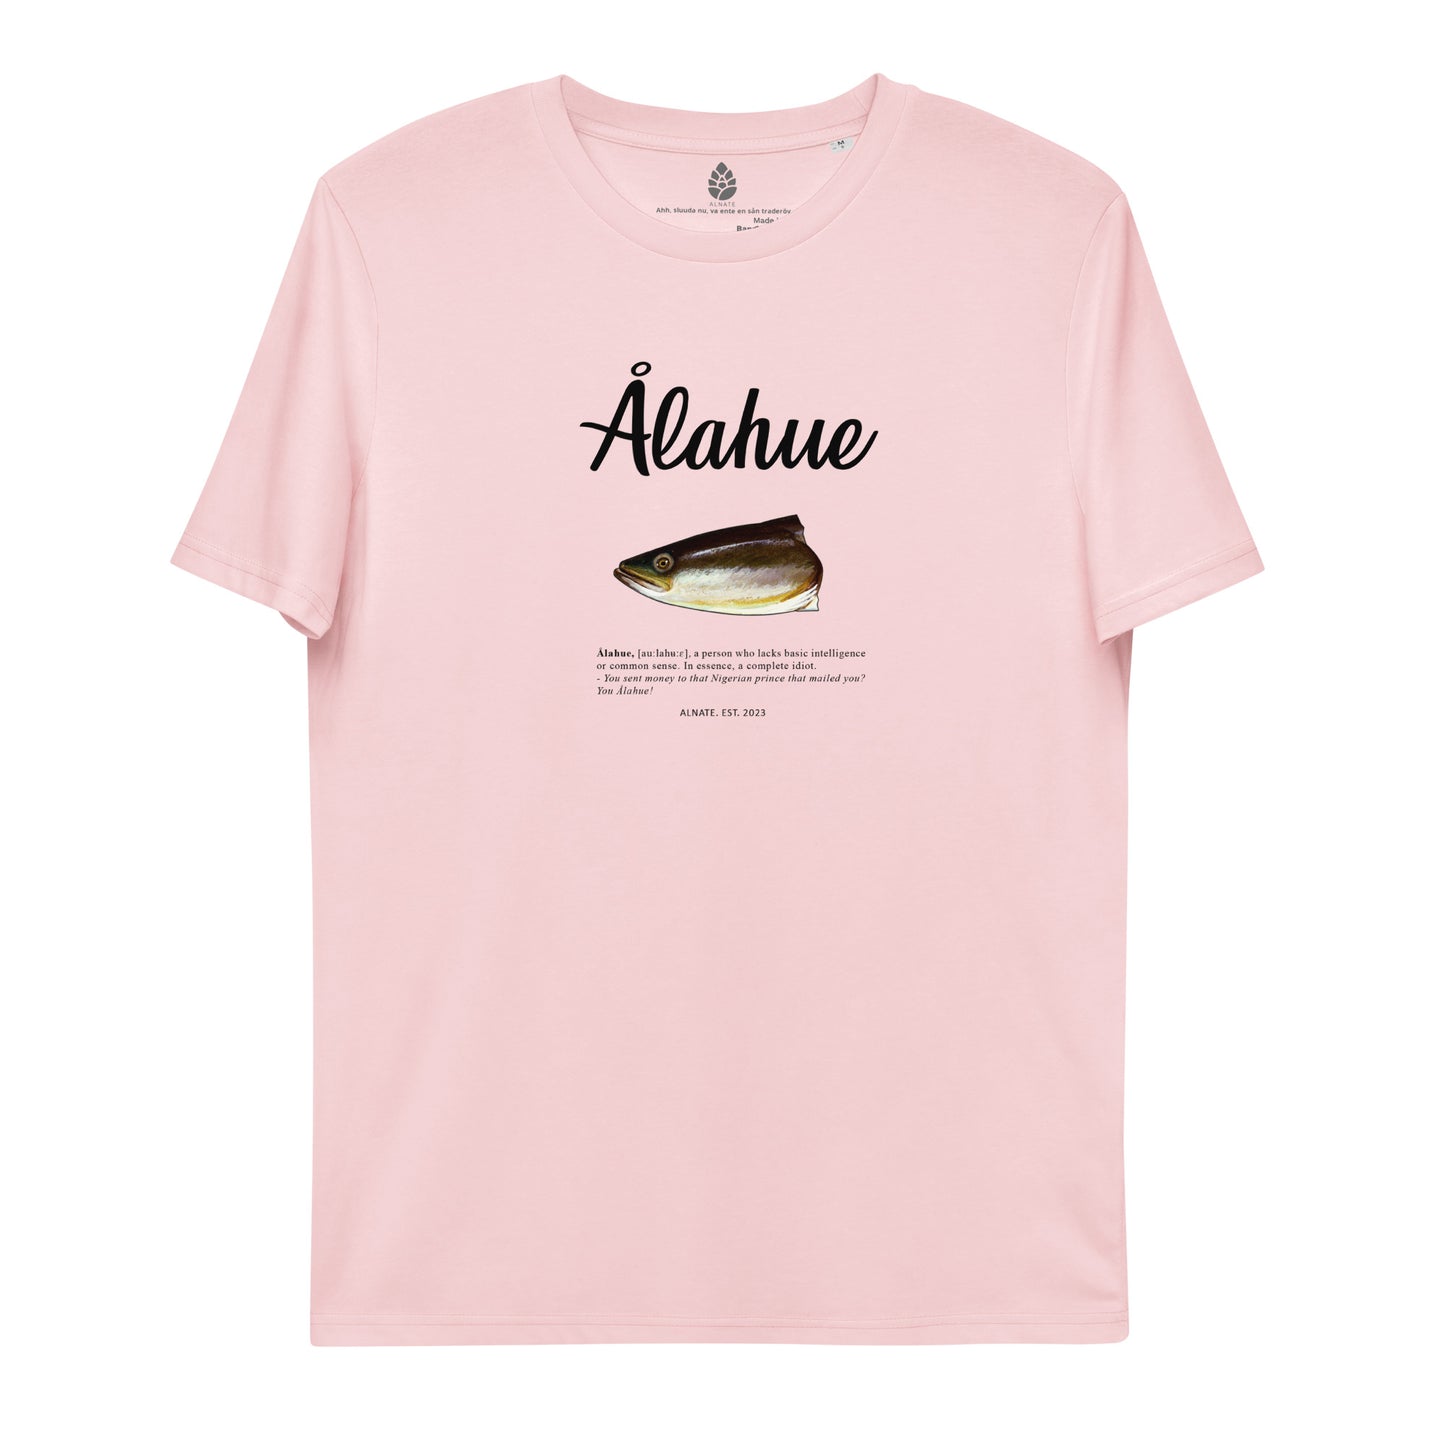 T-shirt - Ålahue